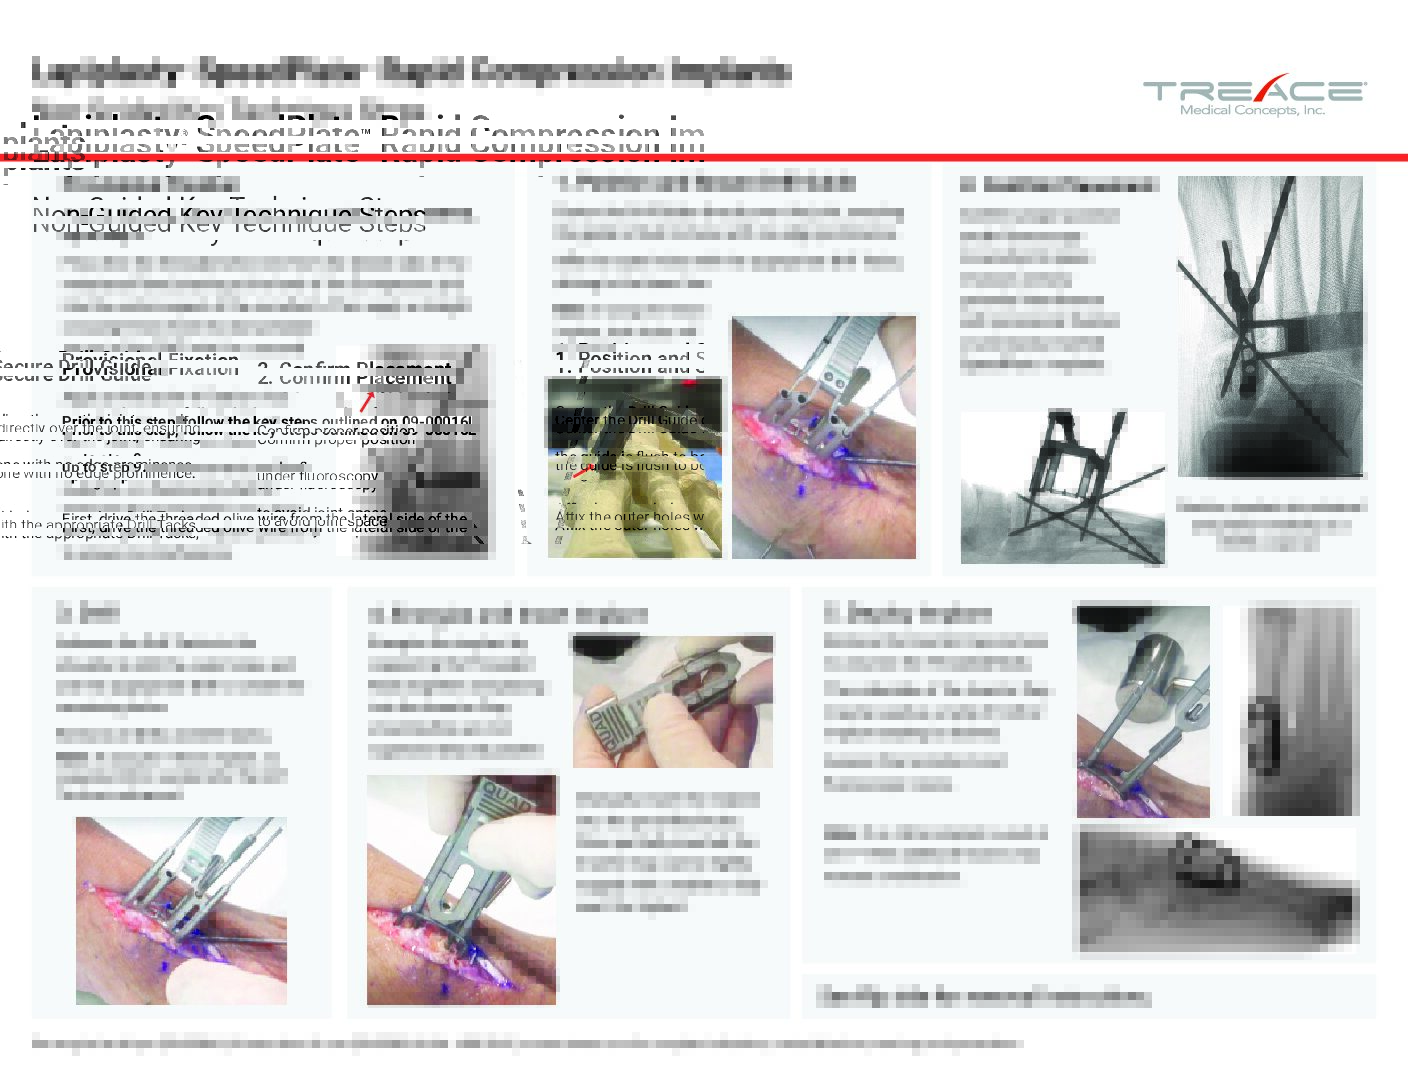 SpeedPlate™ Rapid Compression Implants Key Steps